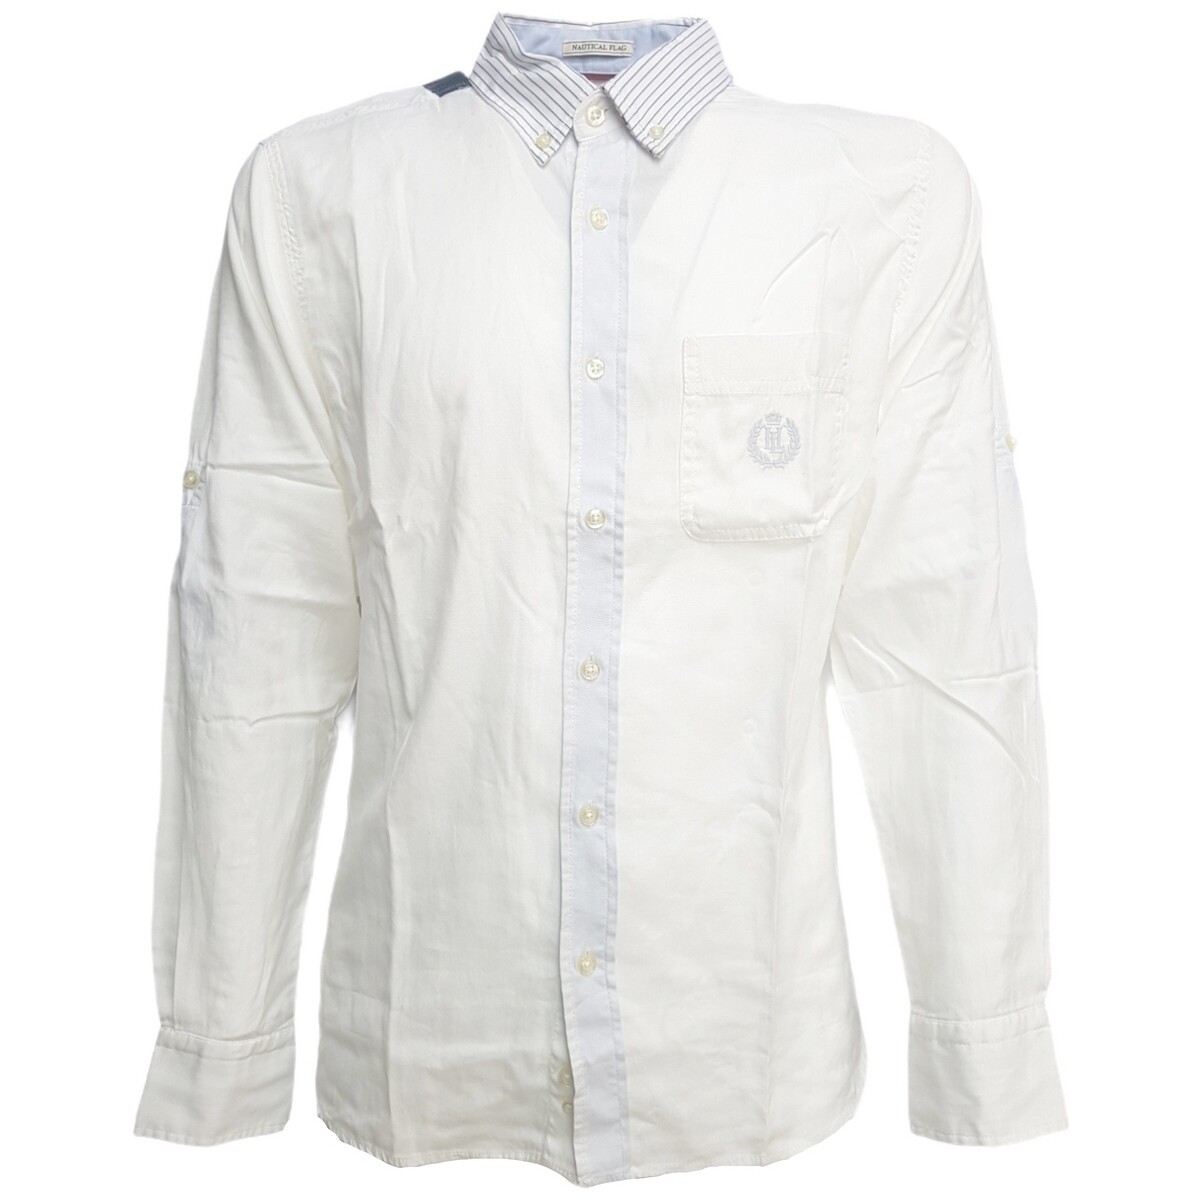 Textil Homem Camisas mangas comprida Henri Lloyd 367010 Branco